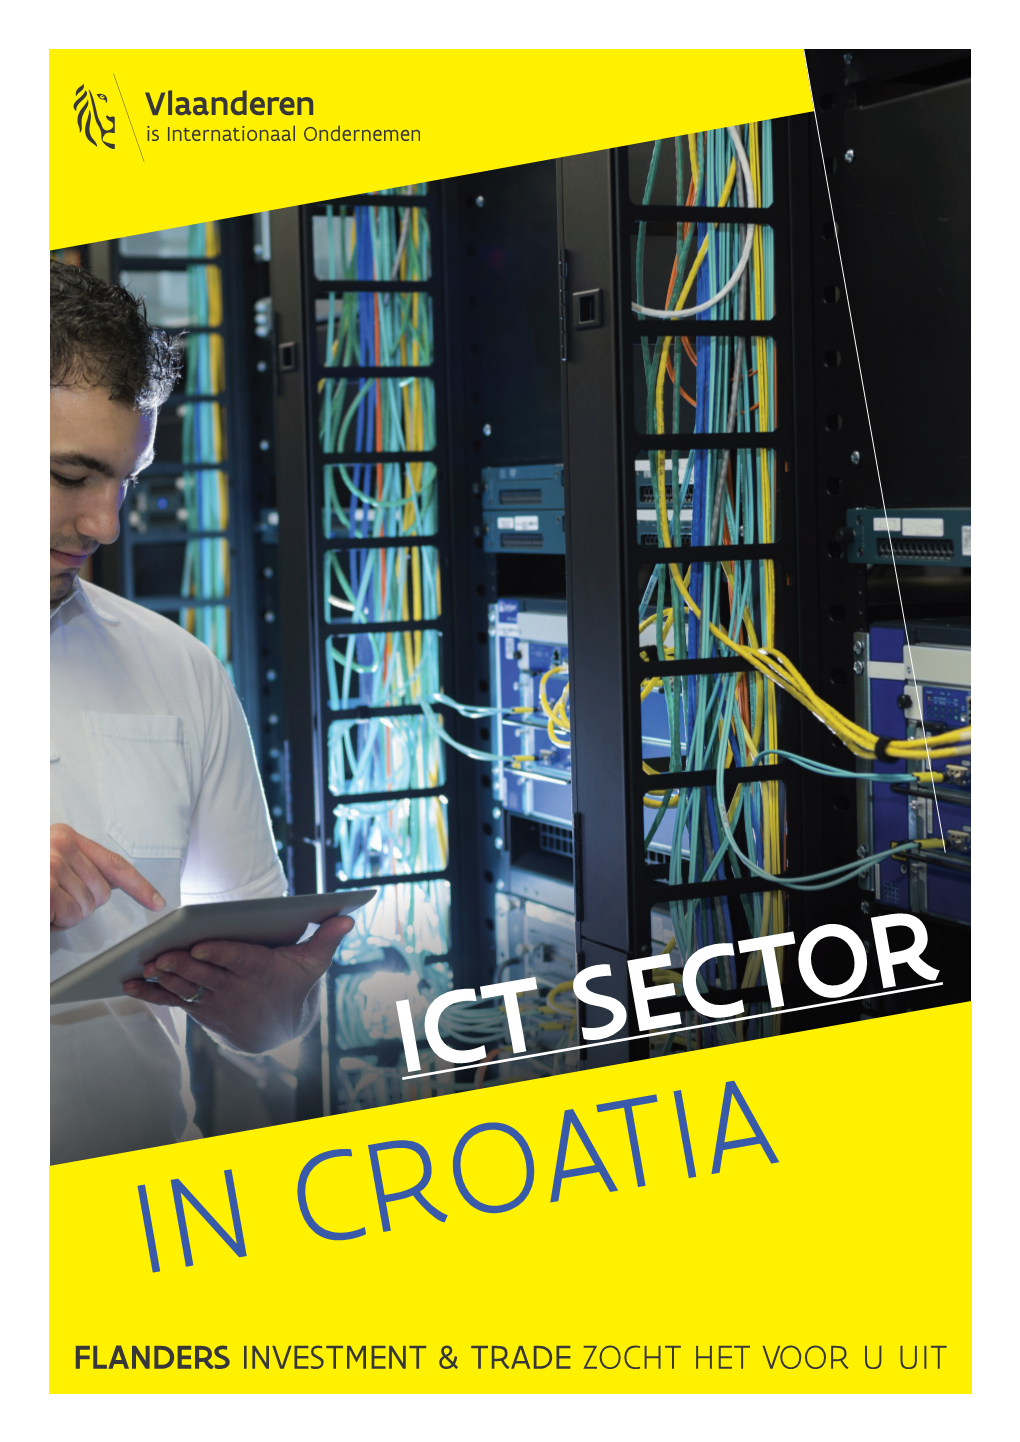 The ICT Sector in Croatia